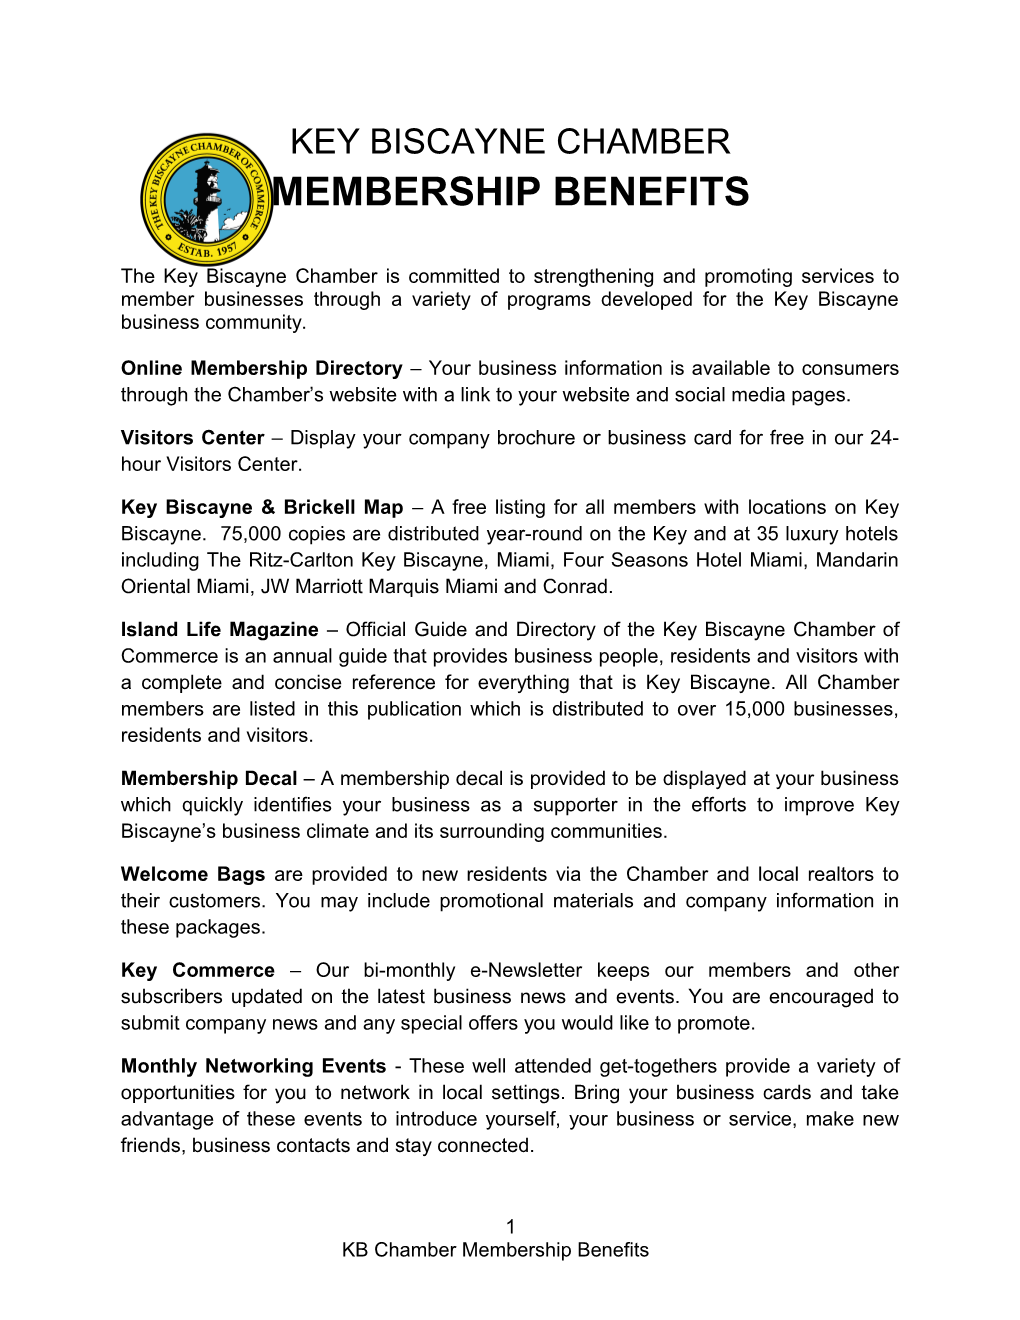 Key Biscayne Chamber Membership Benefits